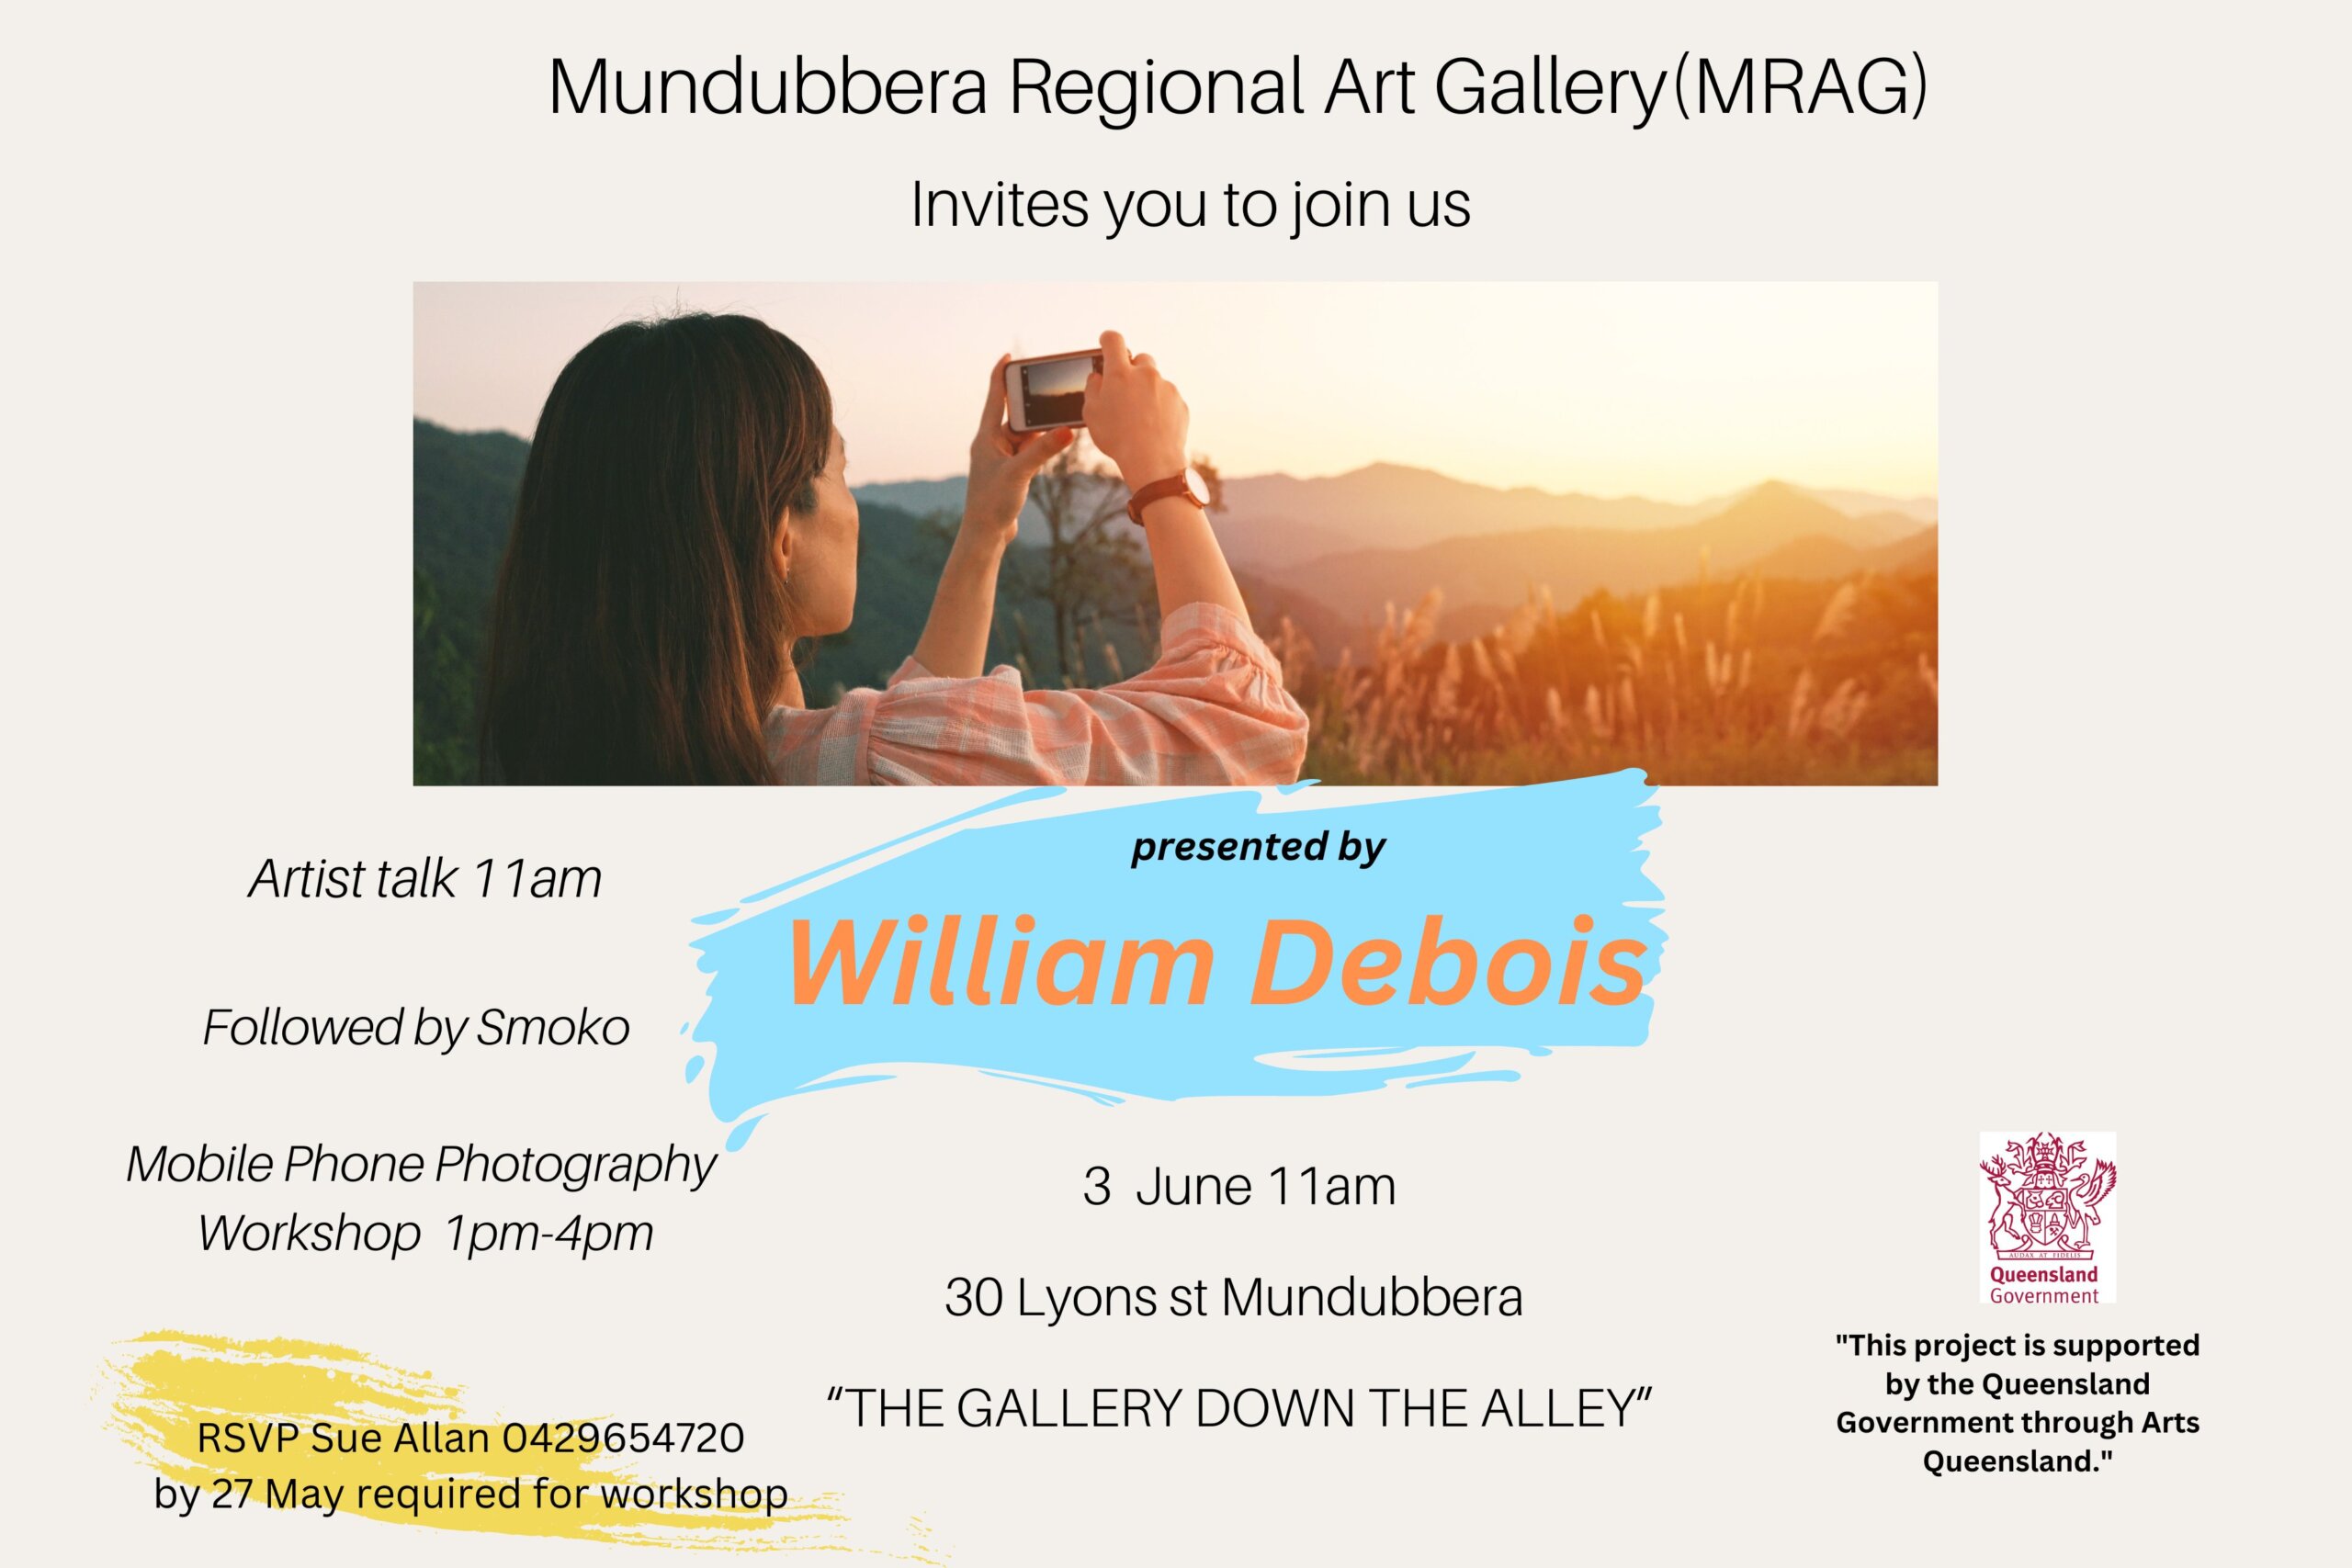 William Debois – Artist Talk and Photography Workshop